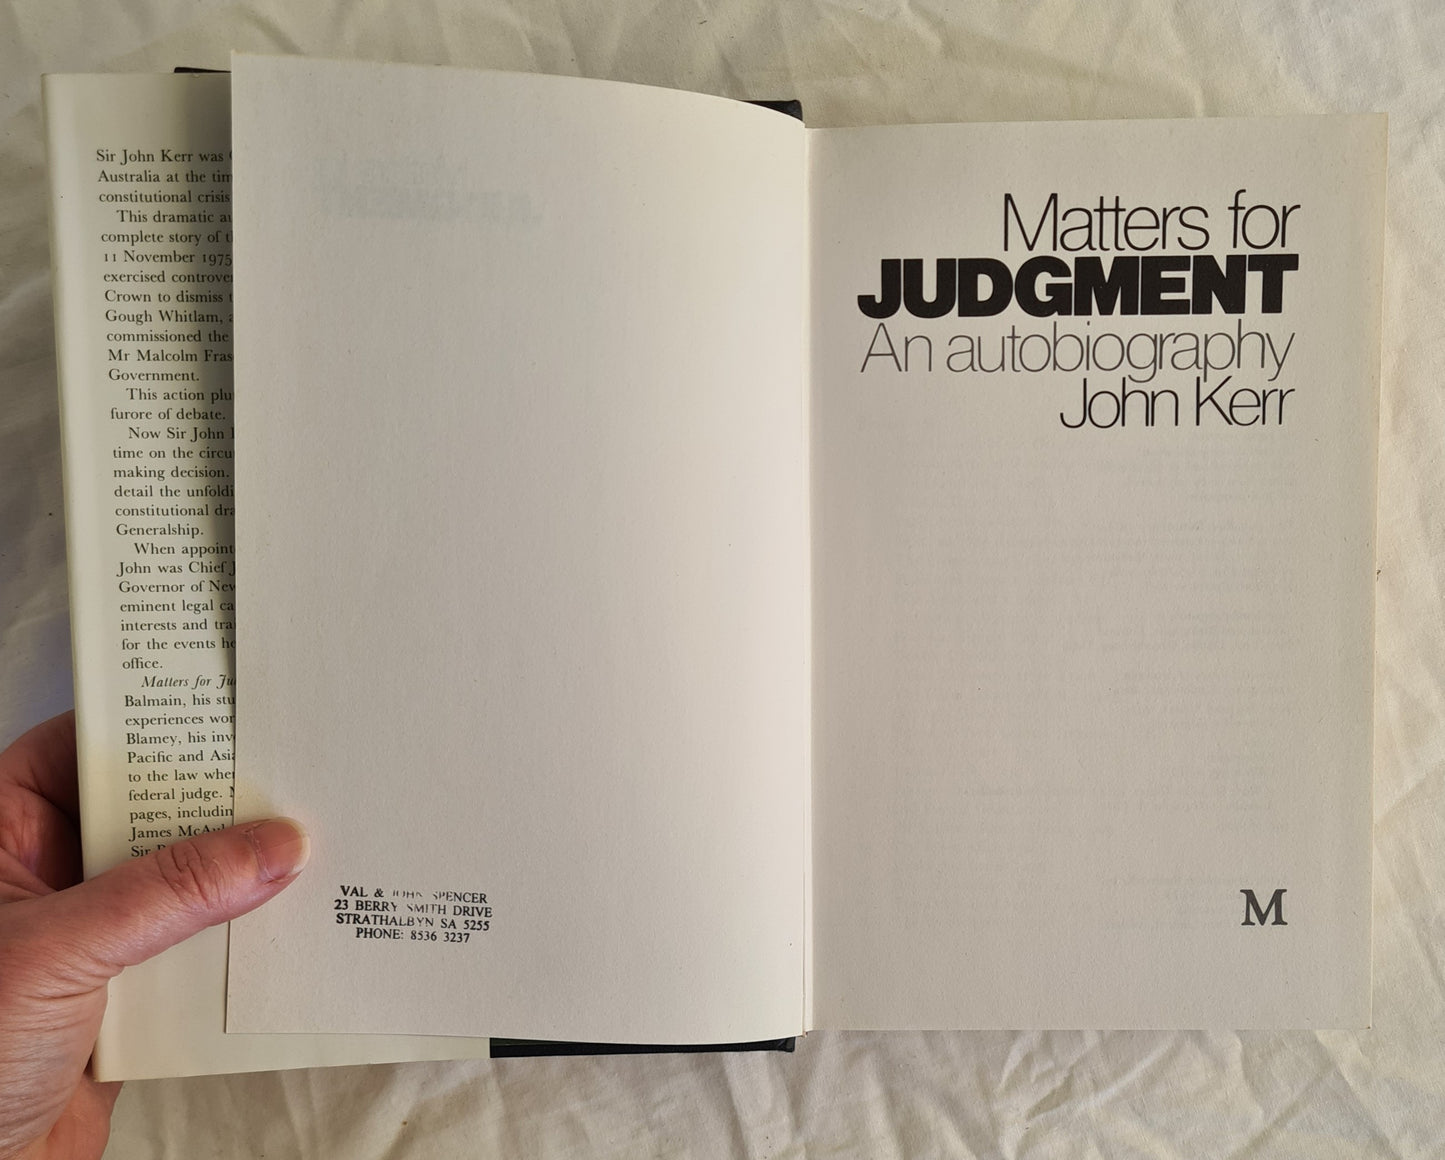 Matters for Judgement by John Kerr